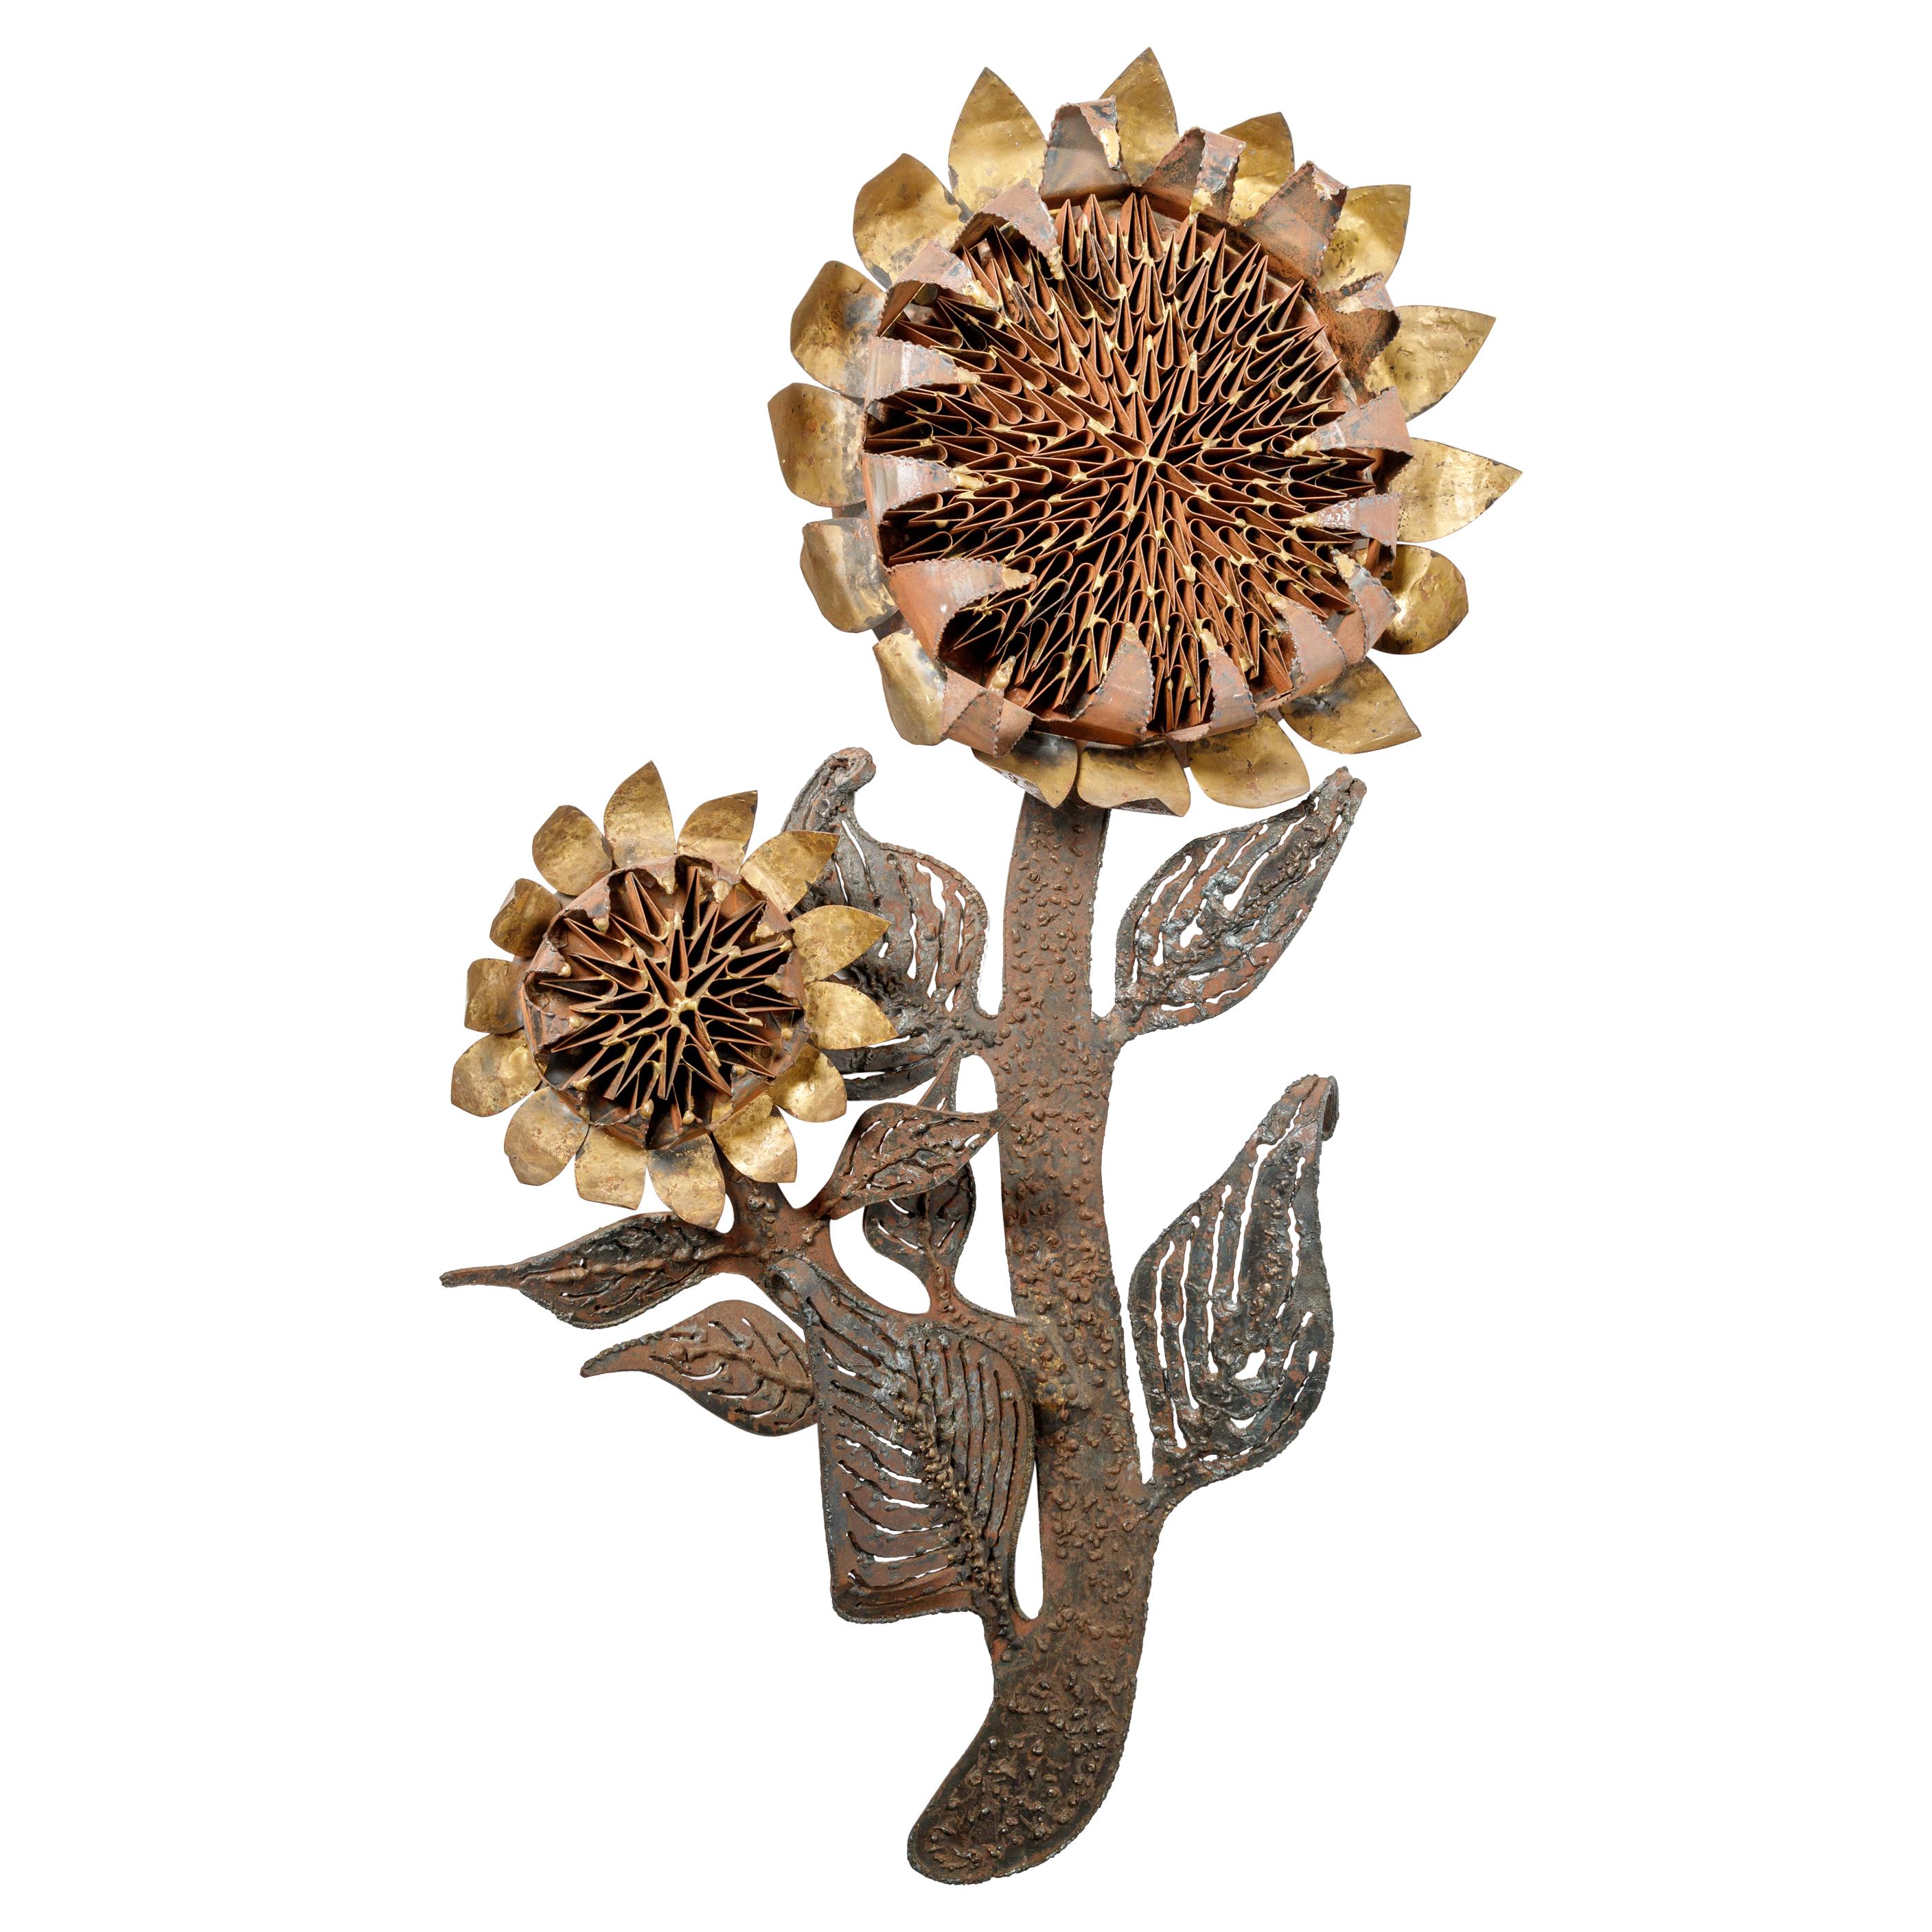 Brutalist Metal Sculpture in Sunflower Form